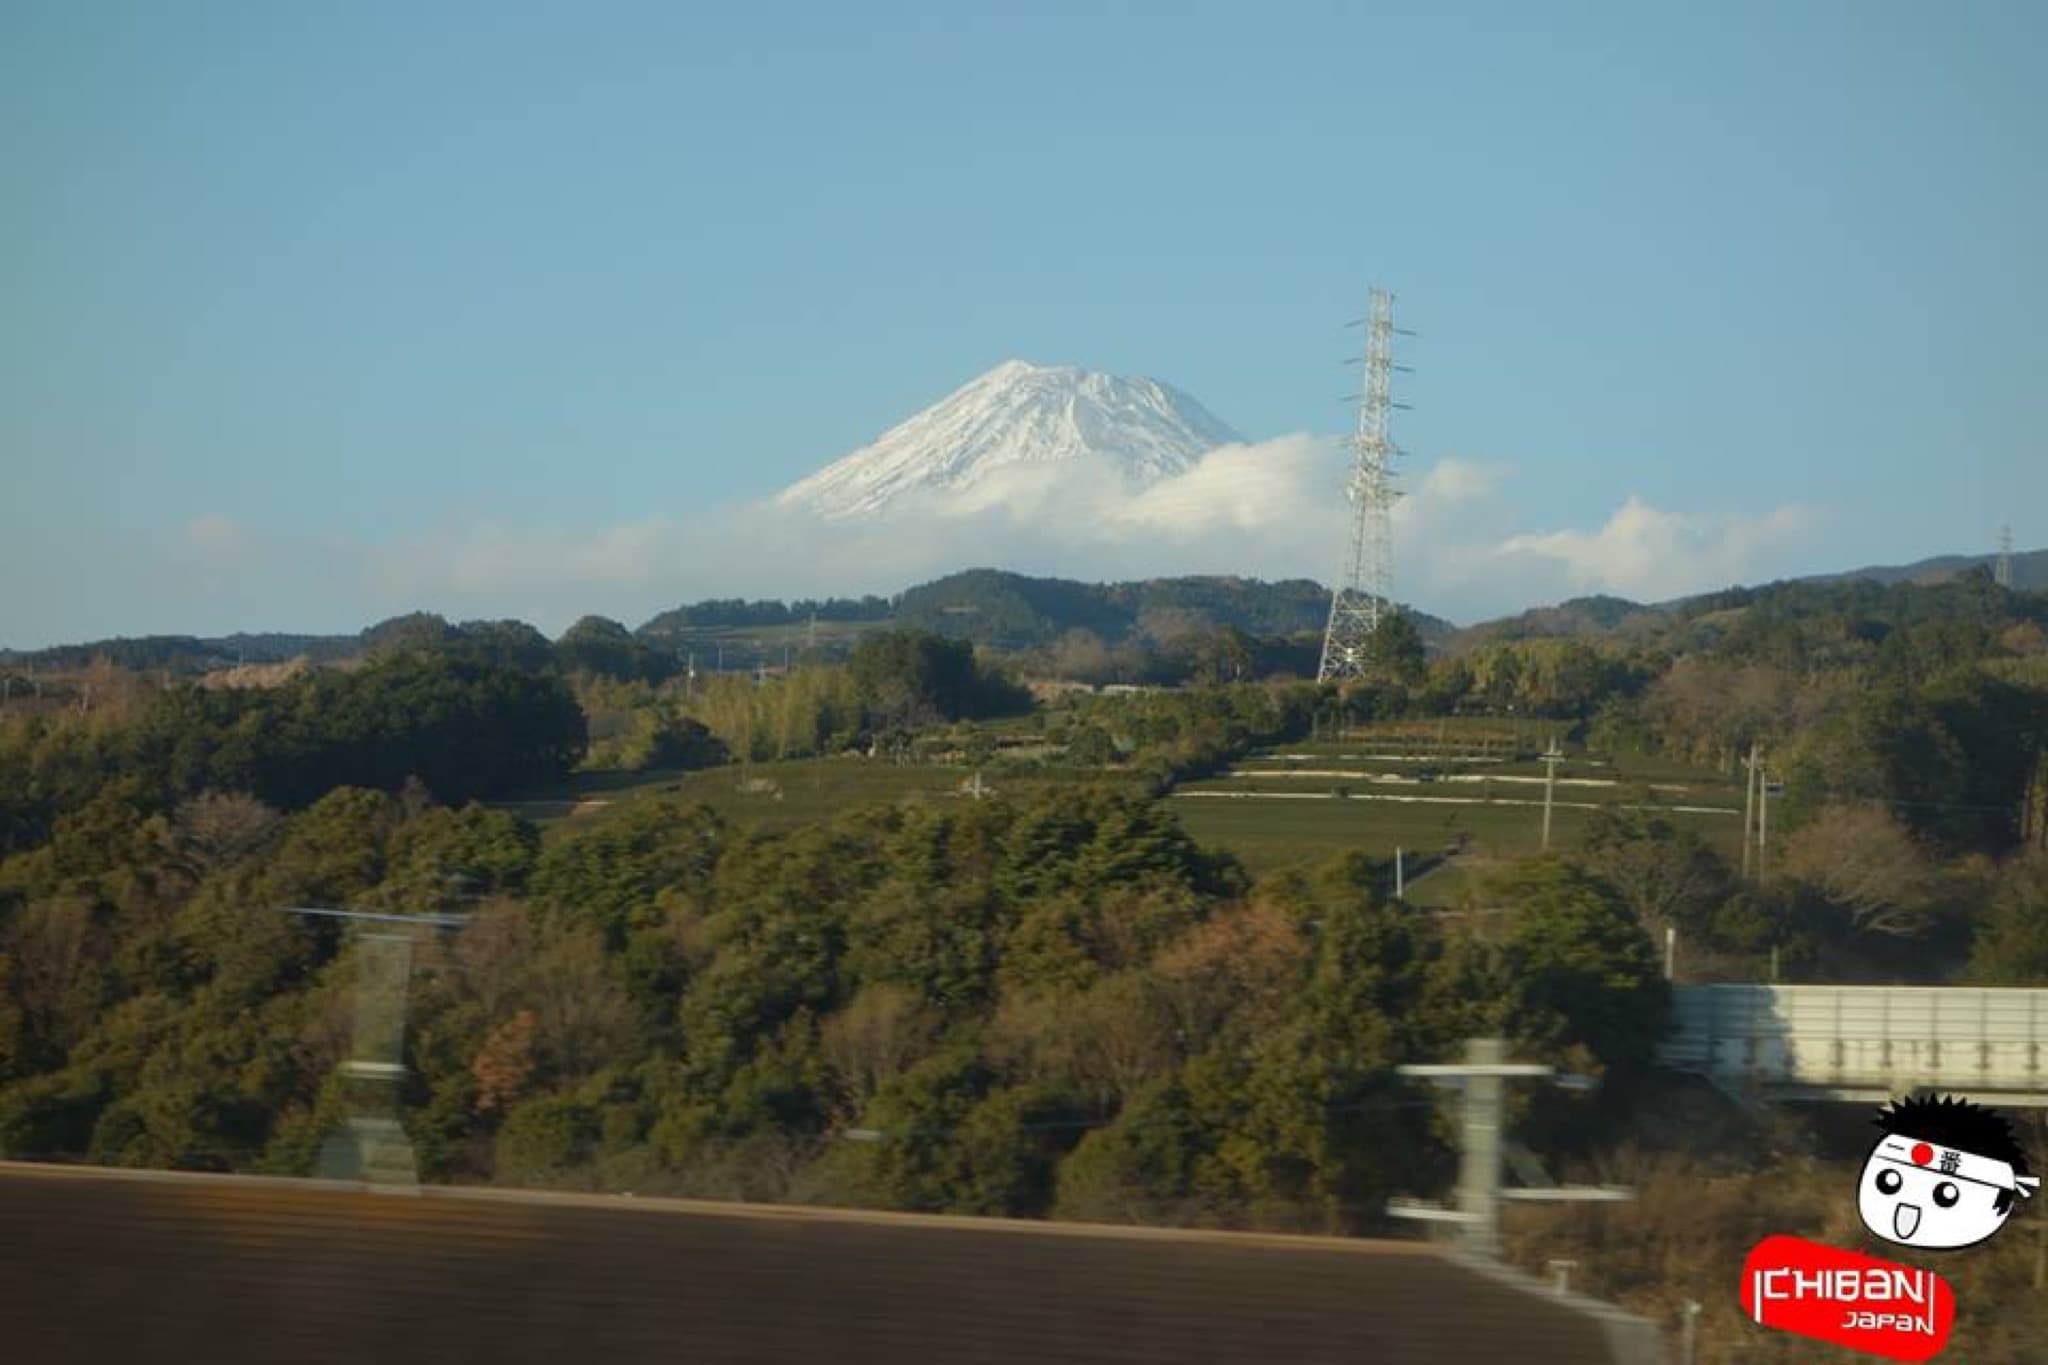 Le Mont Fuji vu du Shinkansen